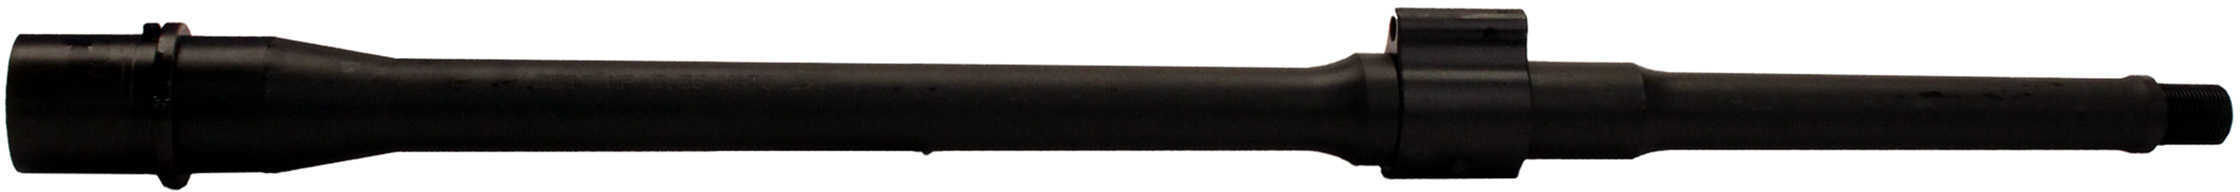 Daniel Defense Barrel Assembly CMV CHF 5.56/1:7 16" Lightweight, Mid Length with LPG Md: 07-078-06106